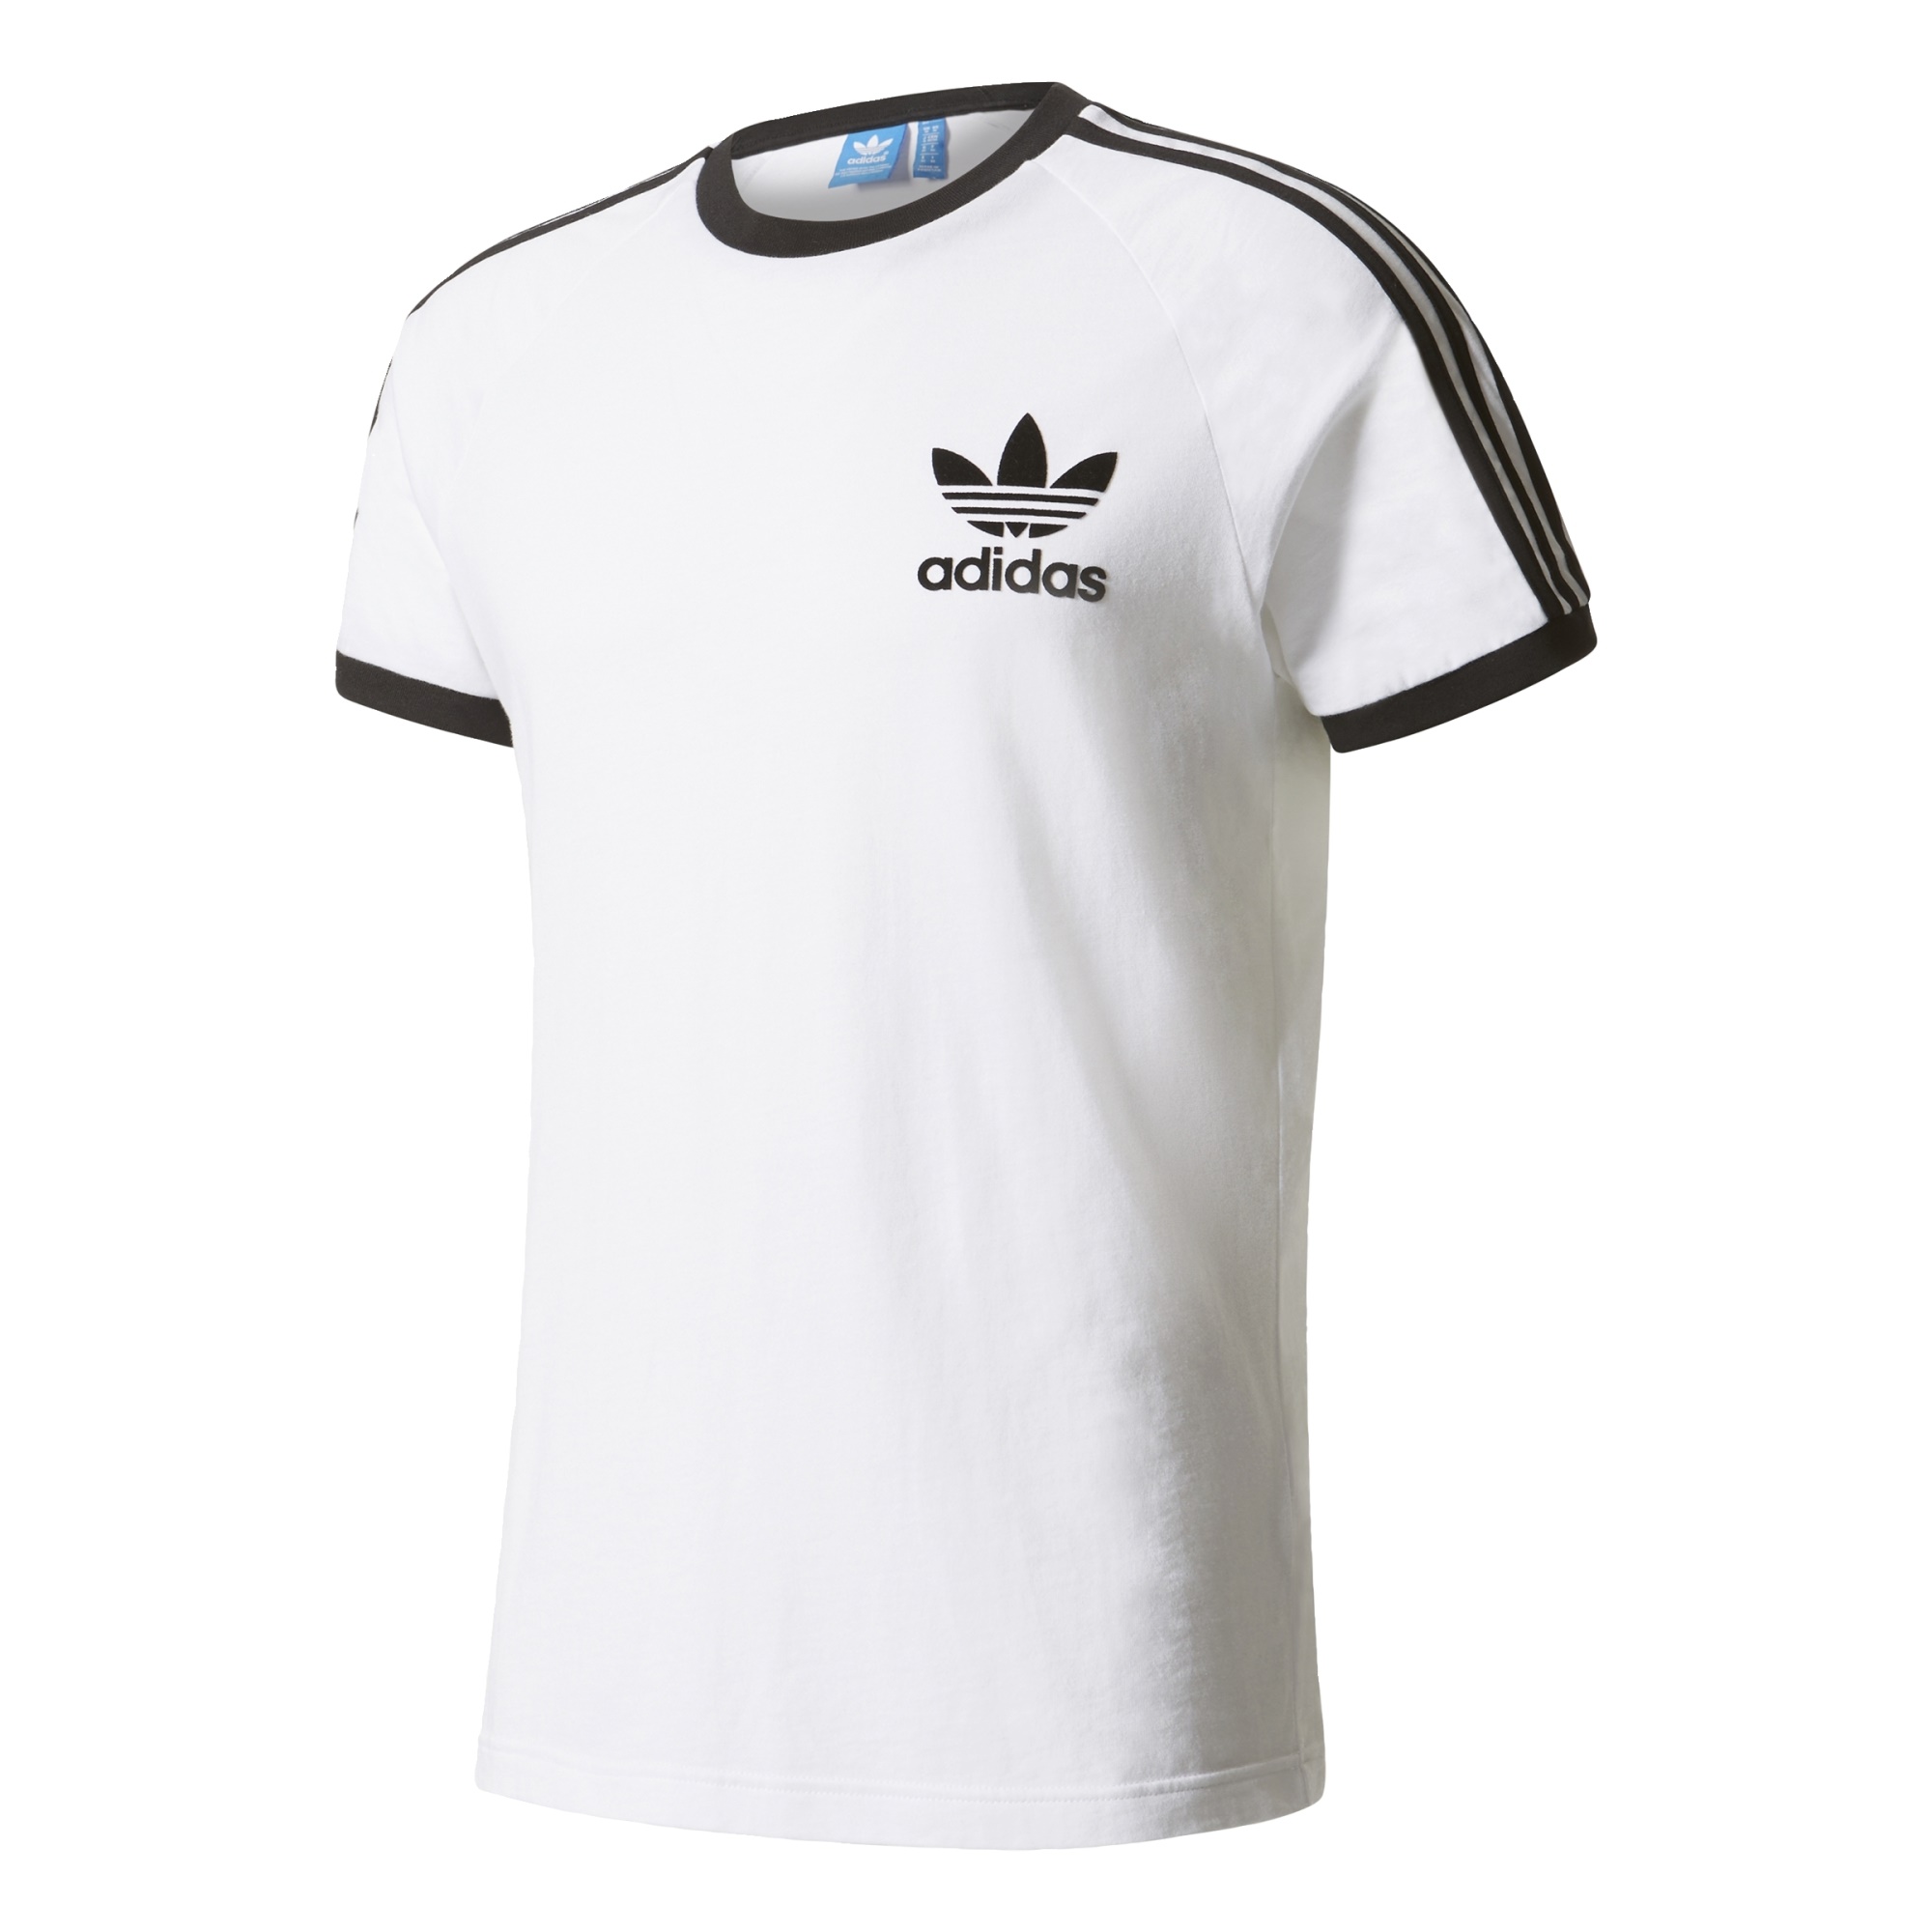 recepción omitir musical Adidas Originals Camiseta CLFN Logo (blanco/negro)